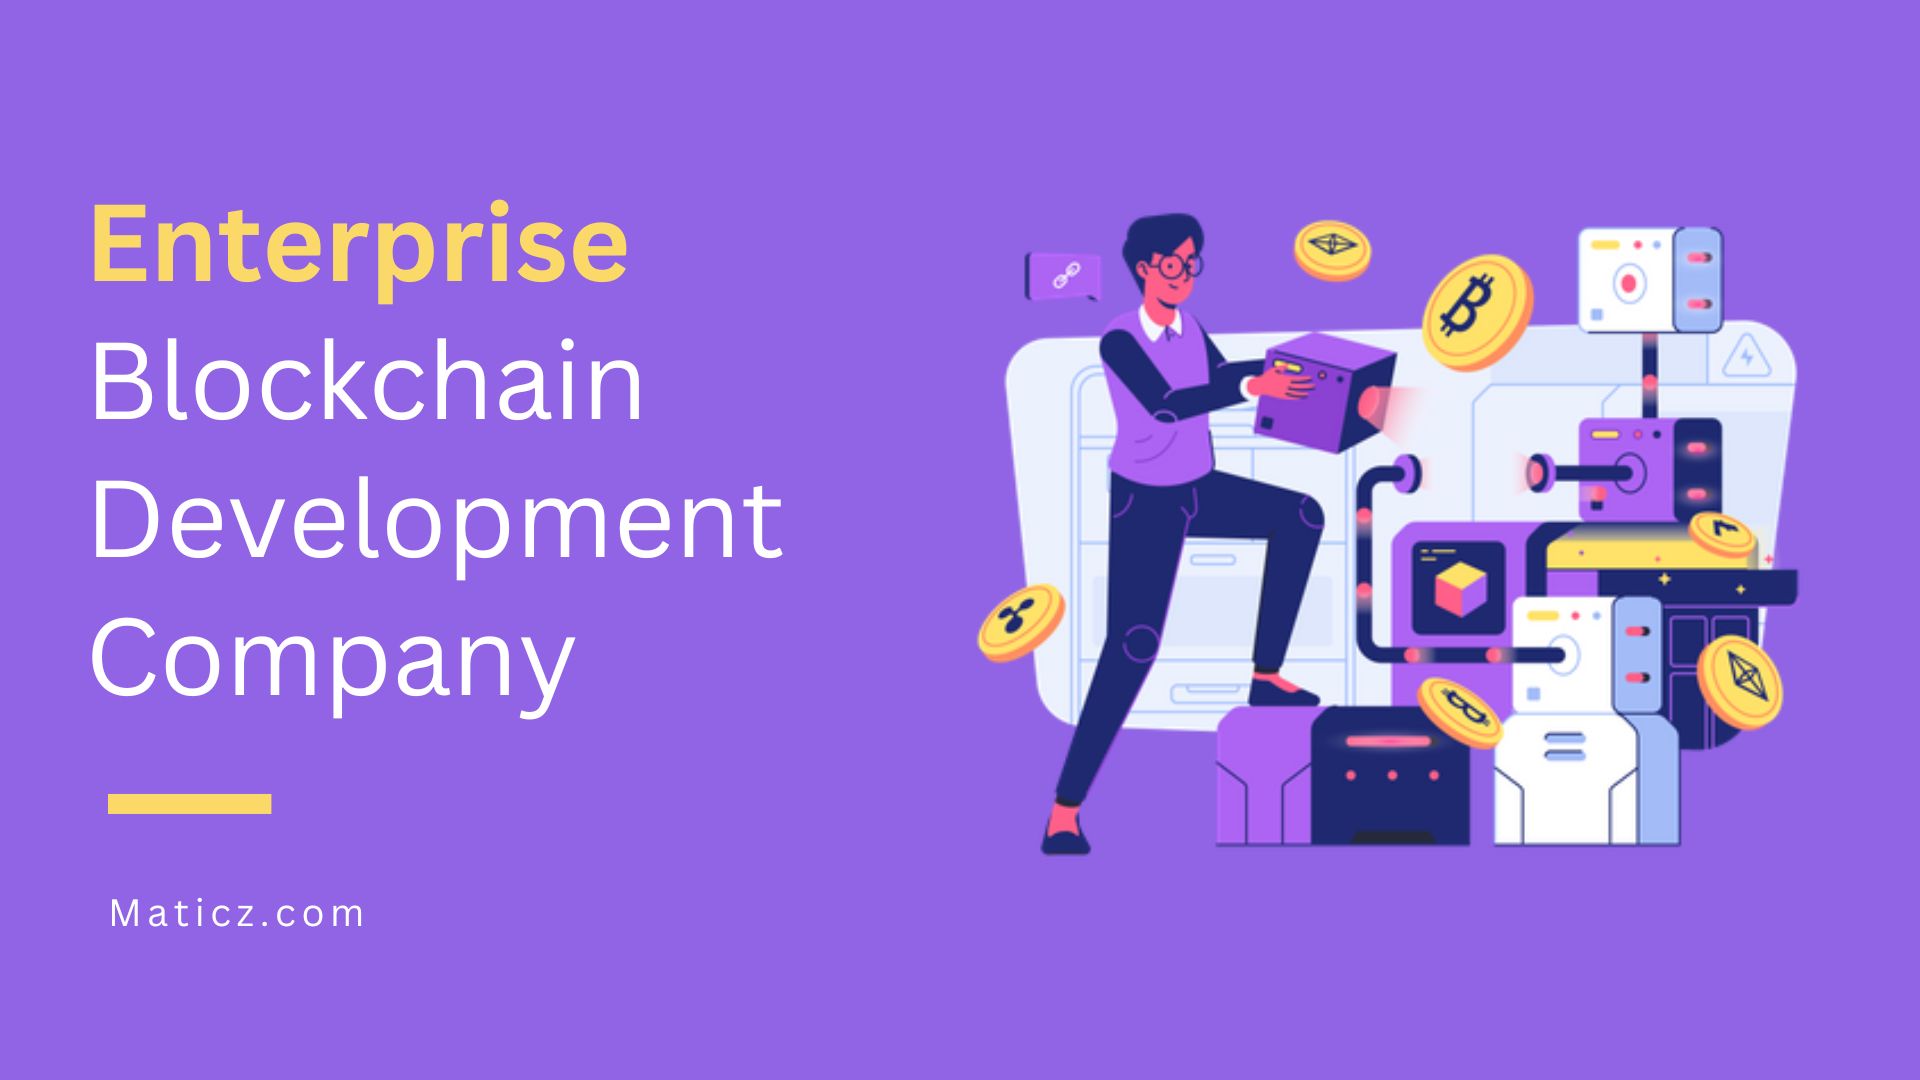 Enterprise Blockchain Development Company